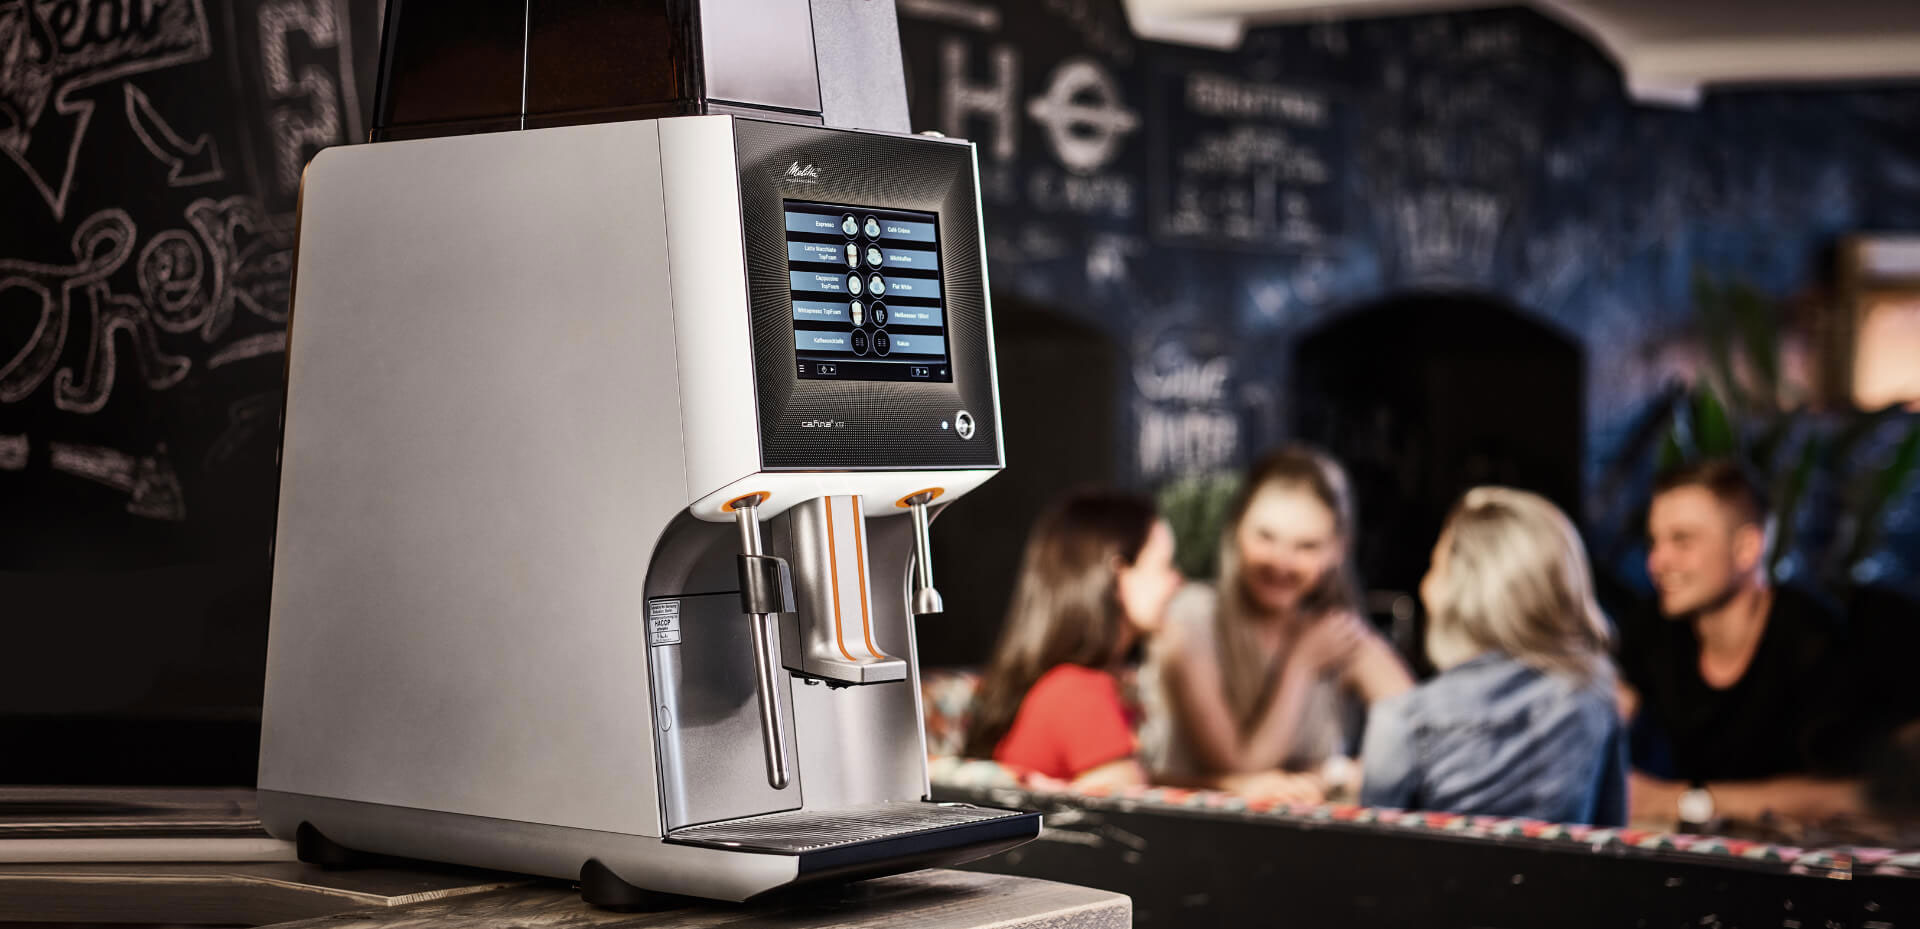 Melitta Cafina CT8, Ideal Coffee Machines